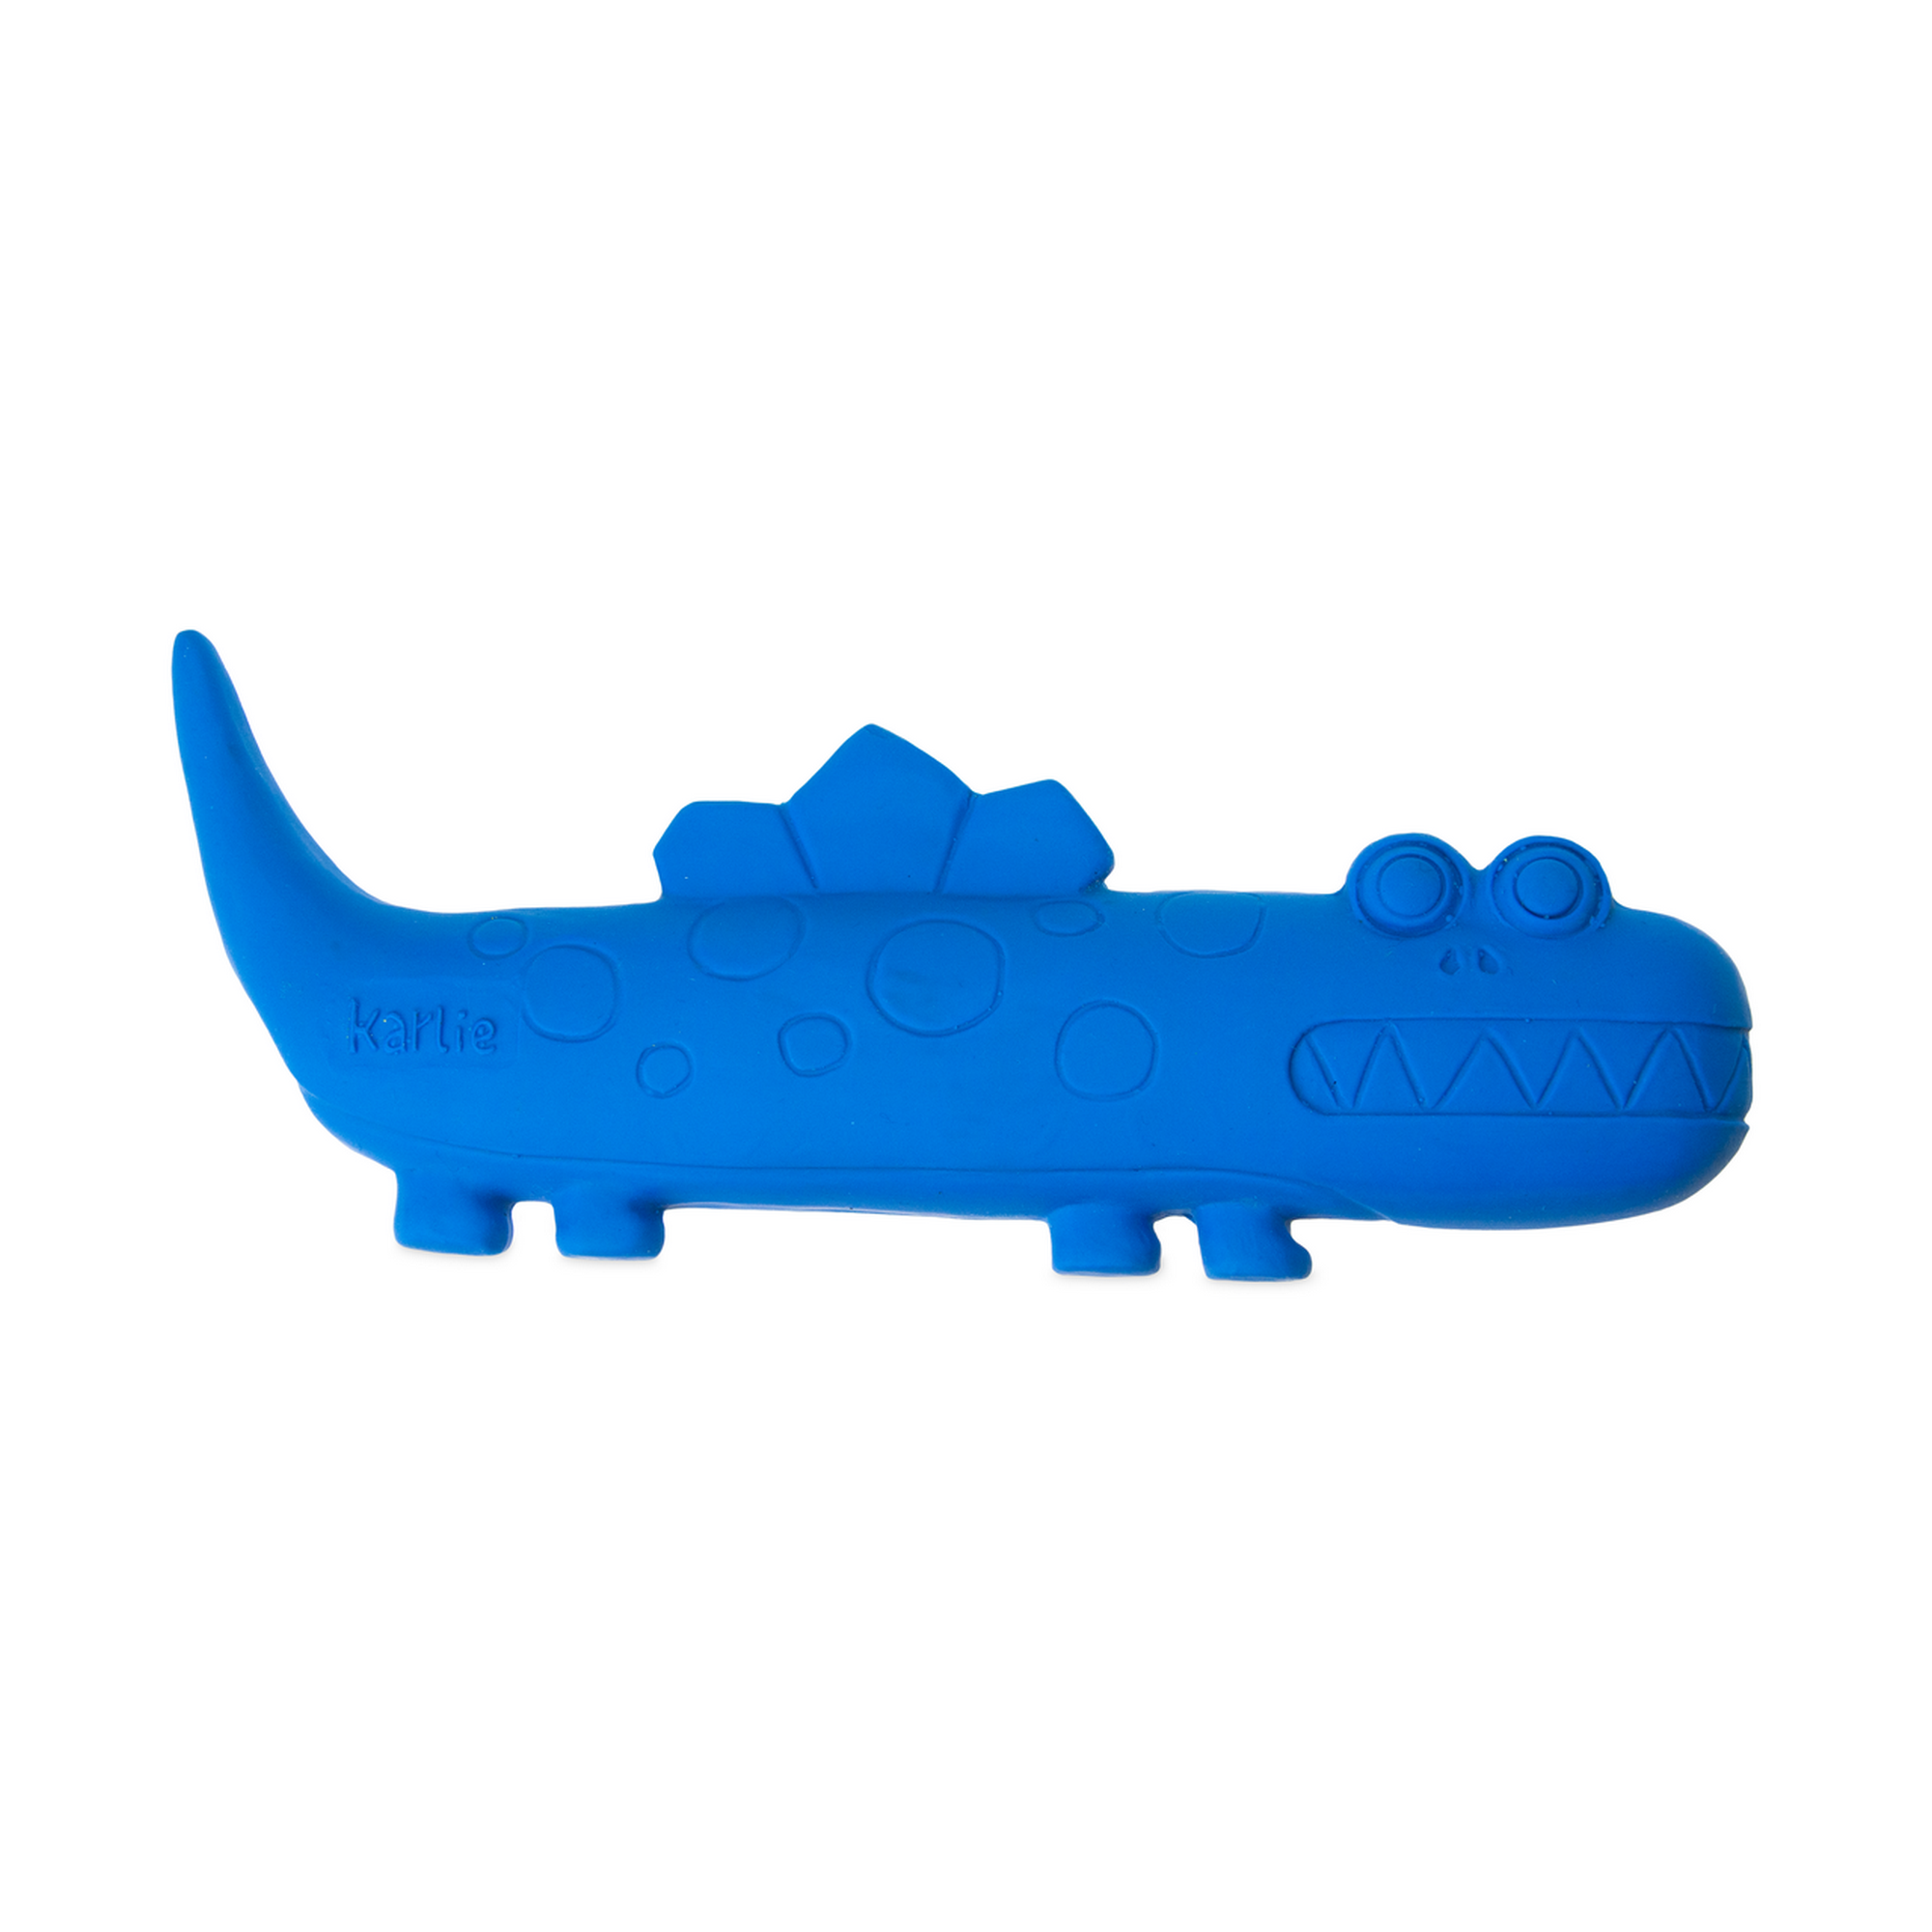 Apportierspielzeug Reptilie blau Latex 20 cm + product picture